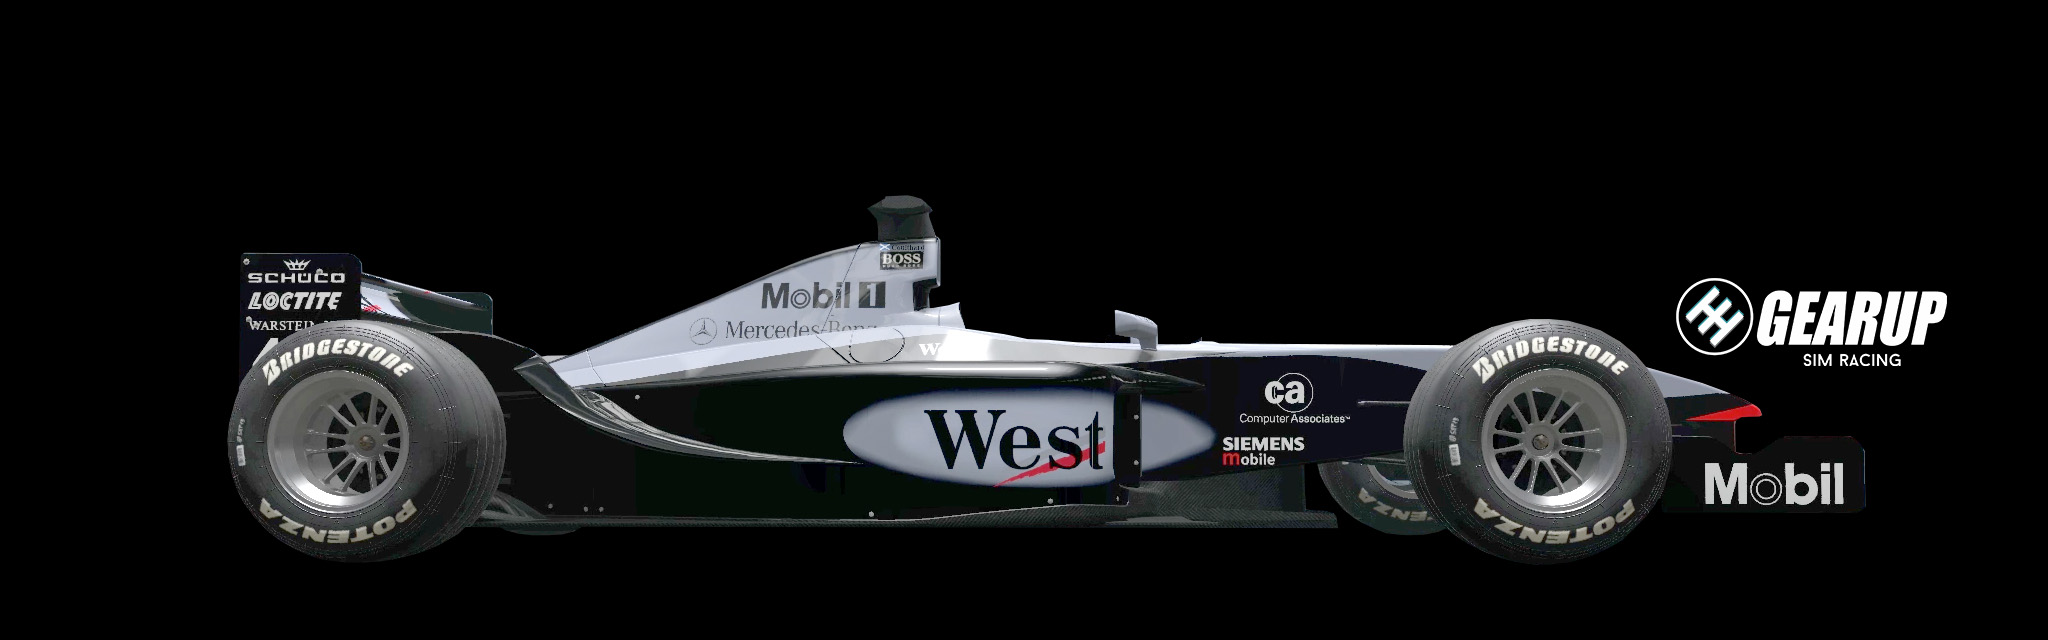 F1-MCL West.jpg